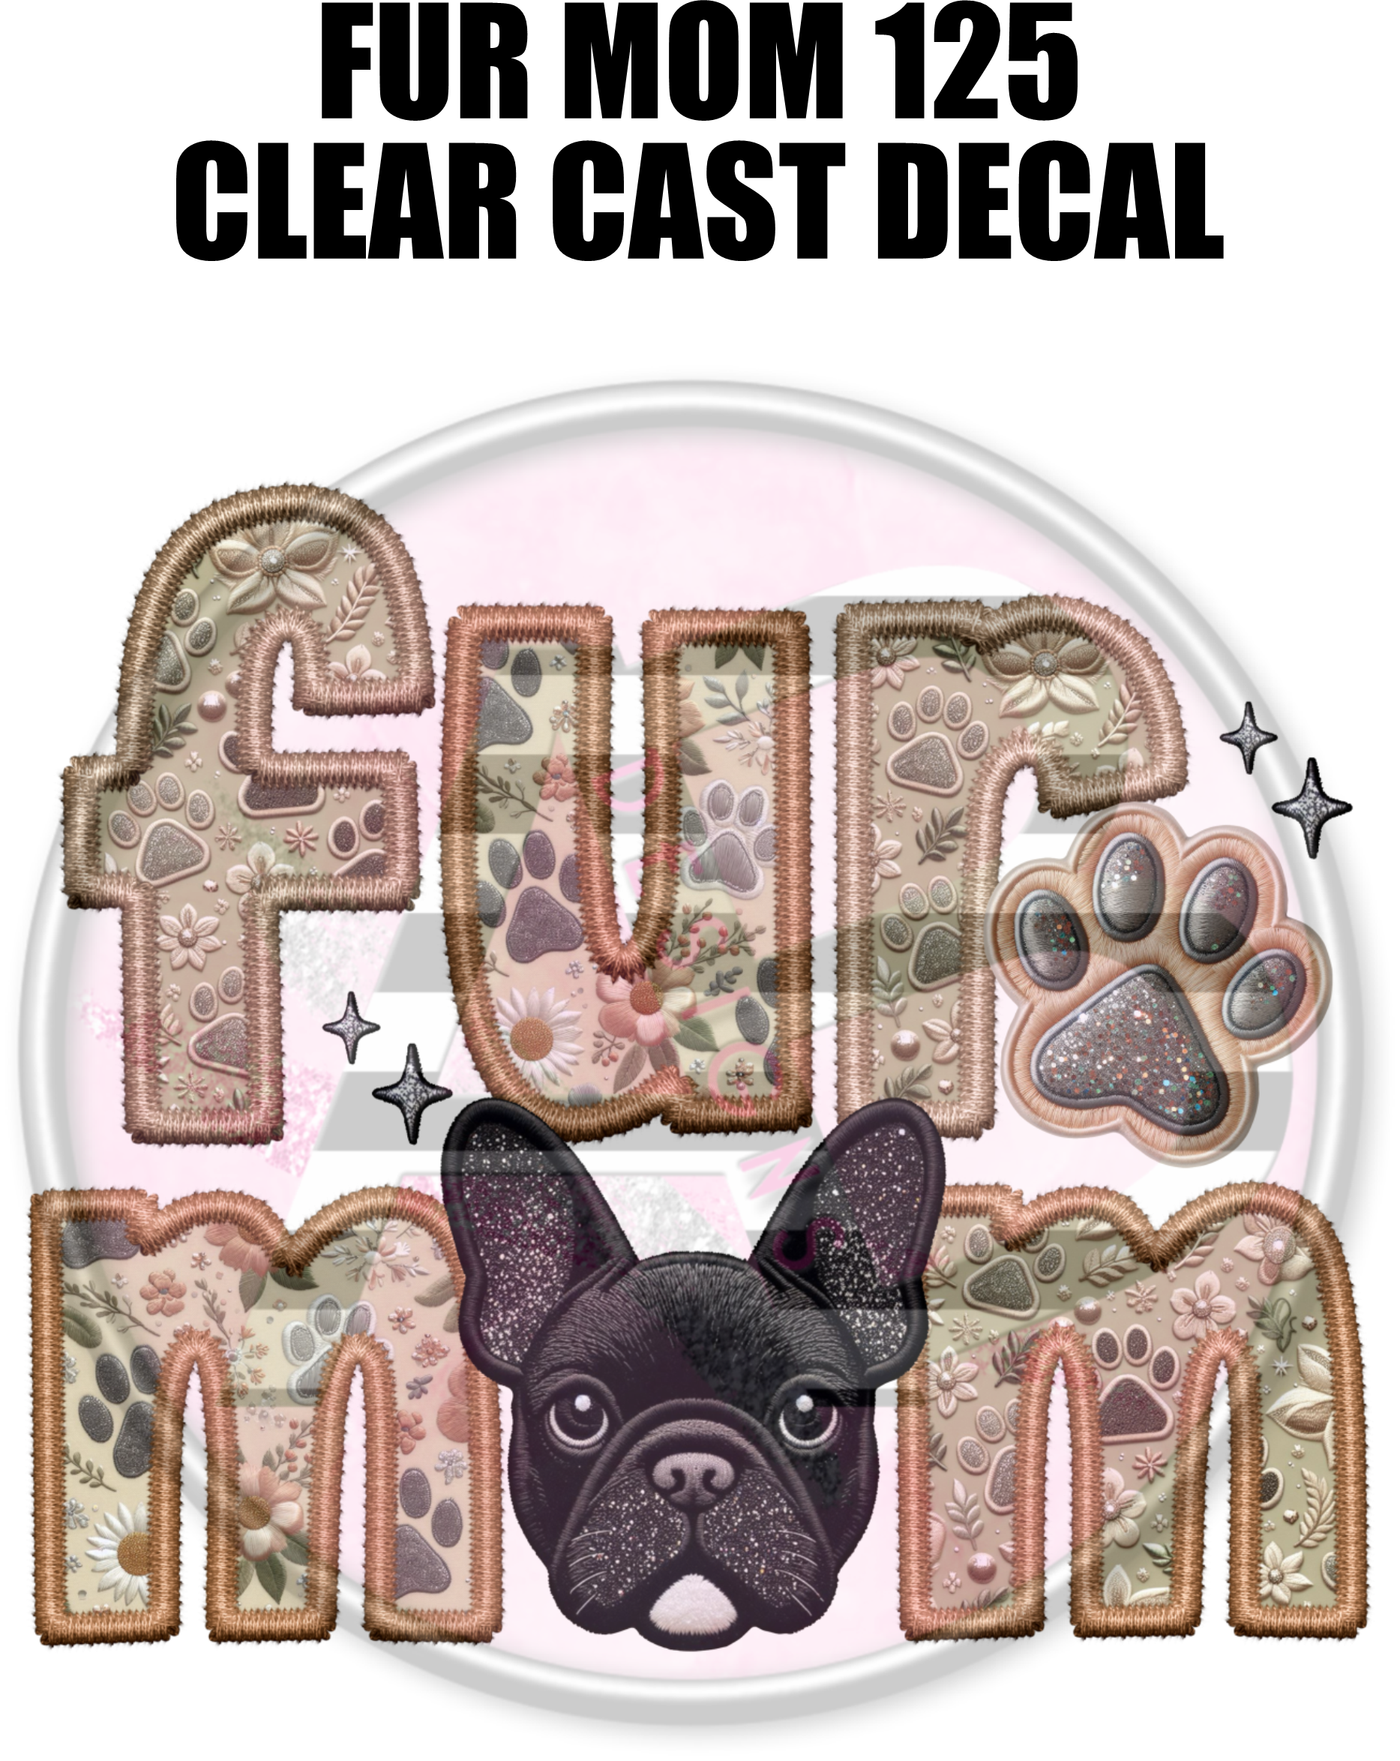 Fur Mom 125 - Clear Cast Decal